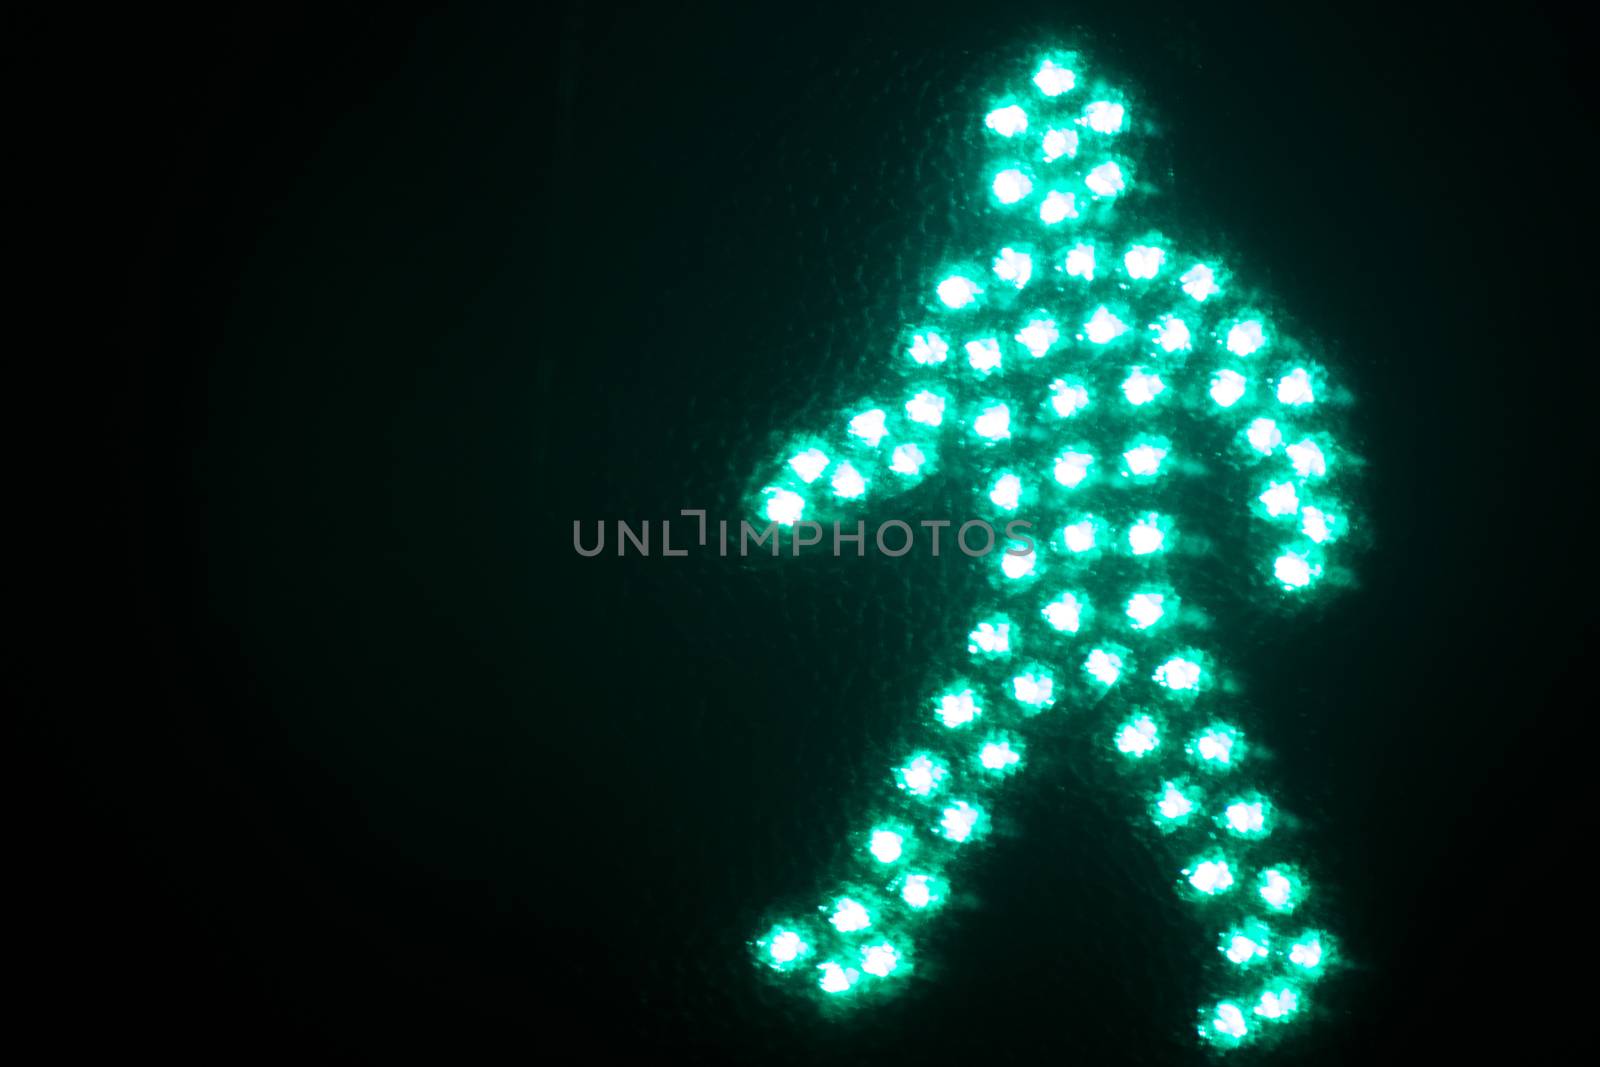 Green man go pedestrian traffic light photo at night on black background.